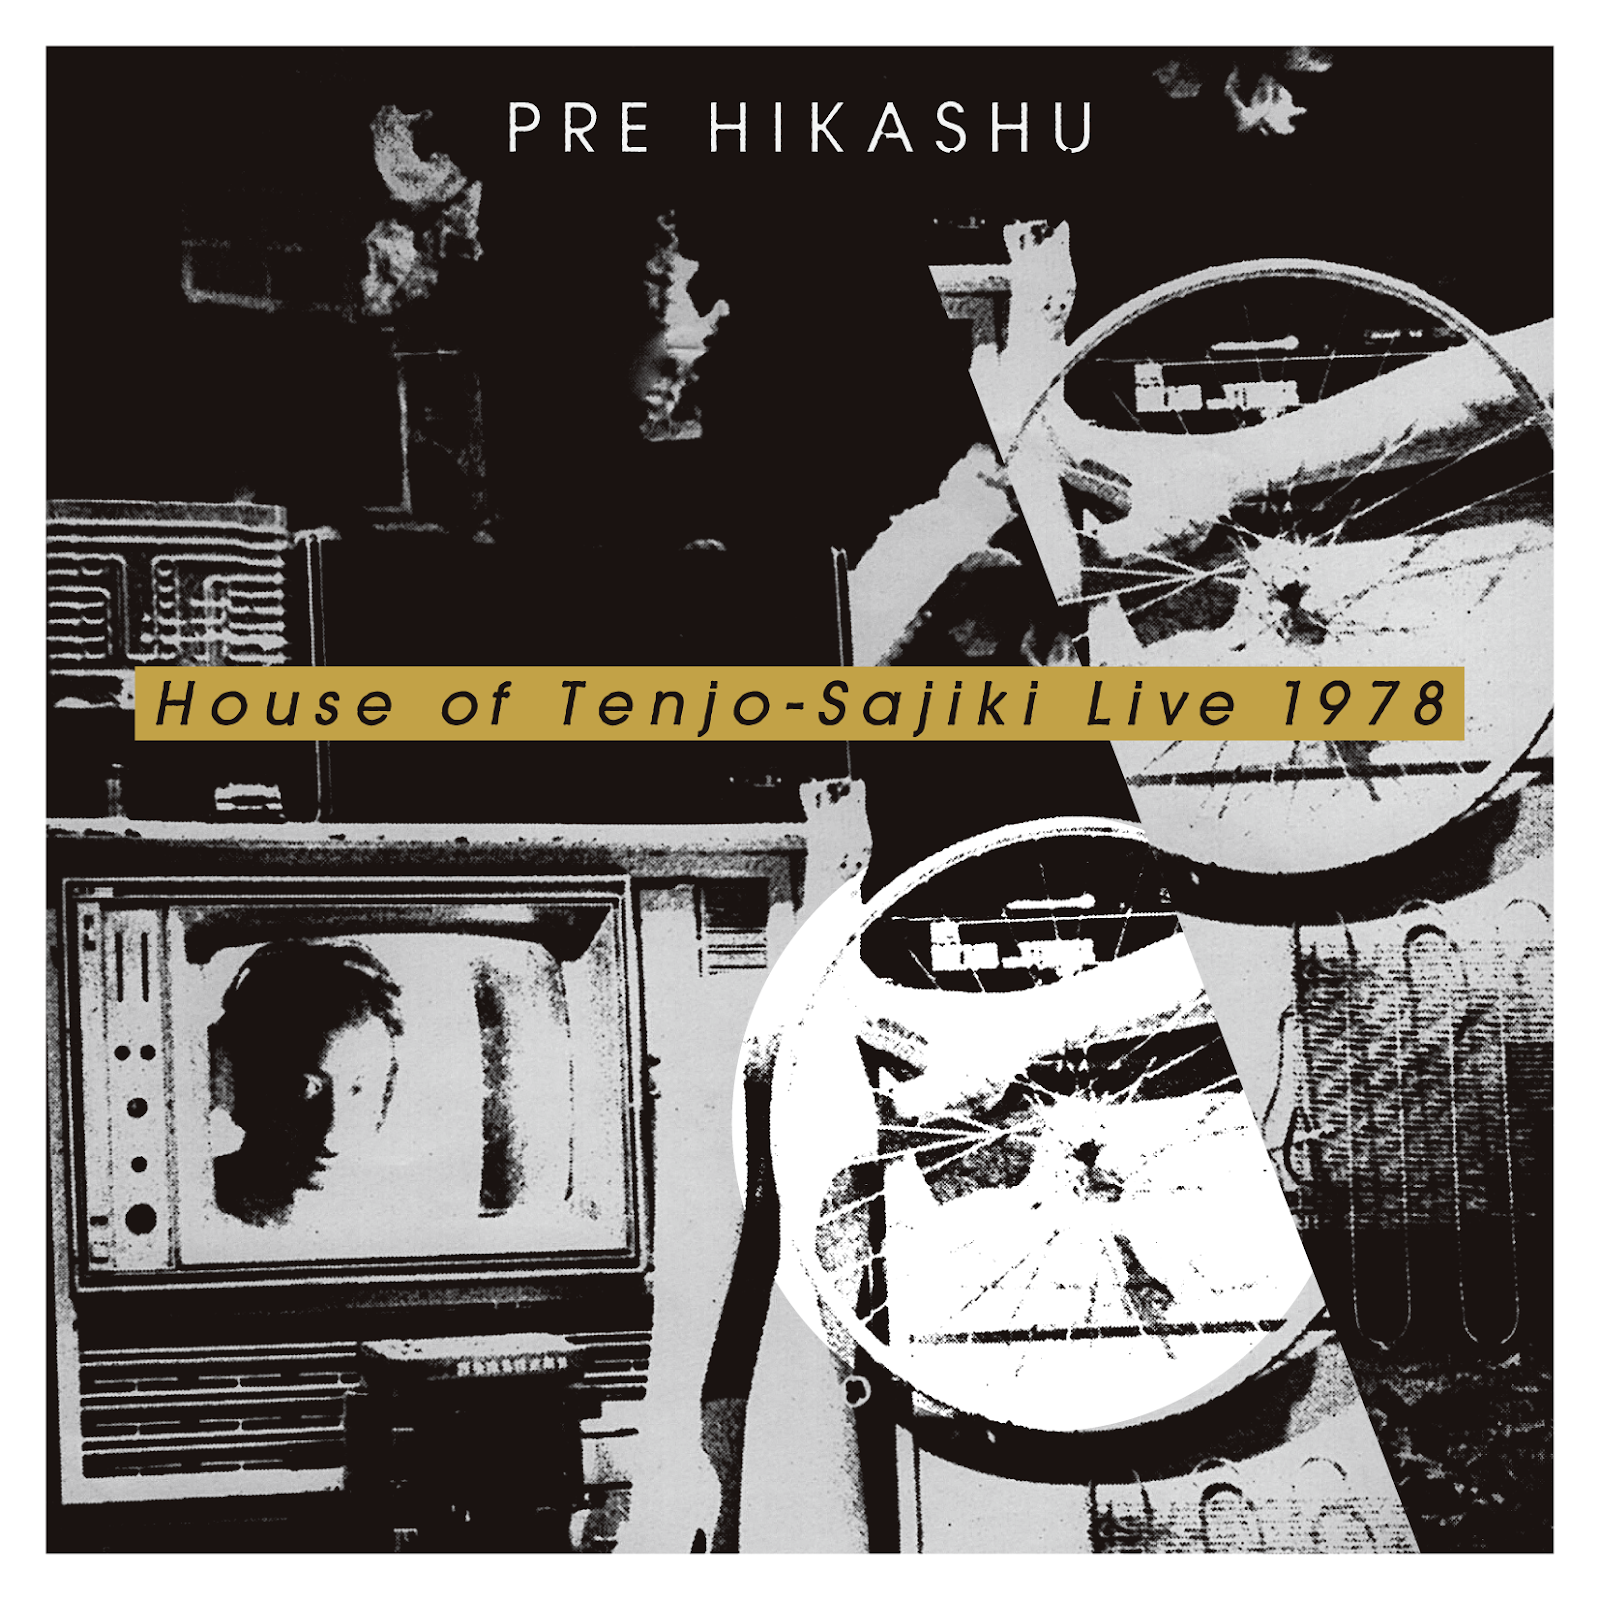 「PRE HIKASHU「House of Tenjo-Sajiki Live 1978」」の画像検索結果